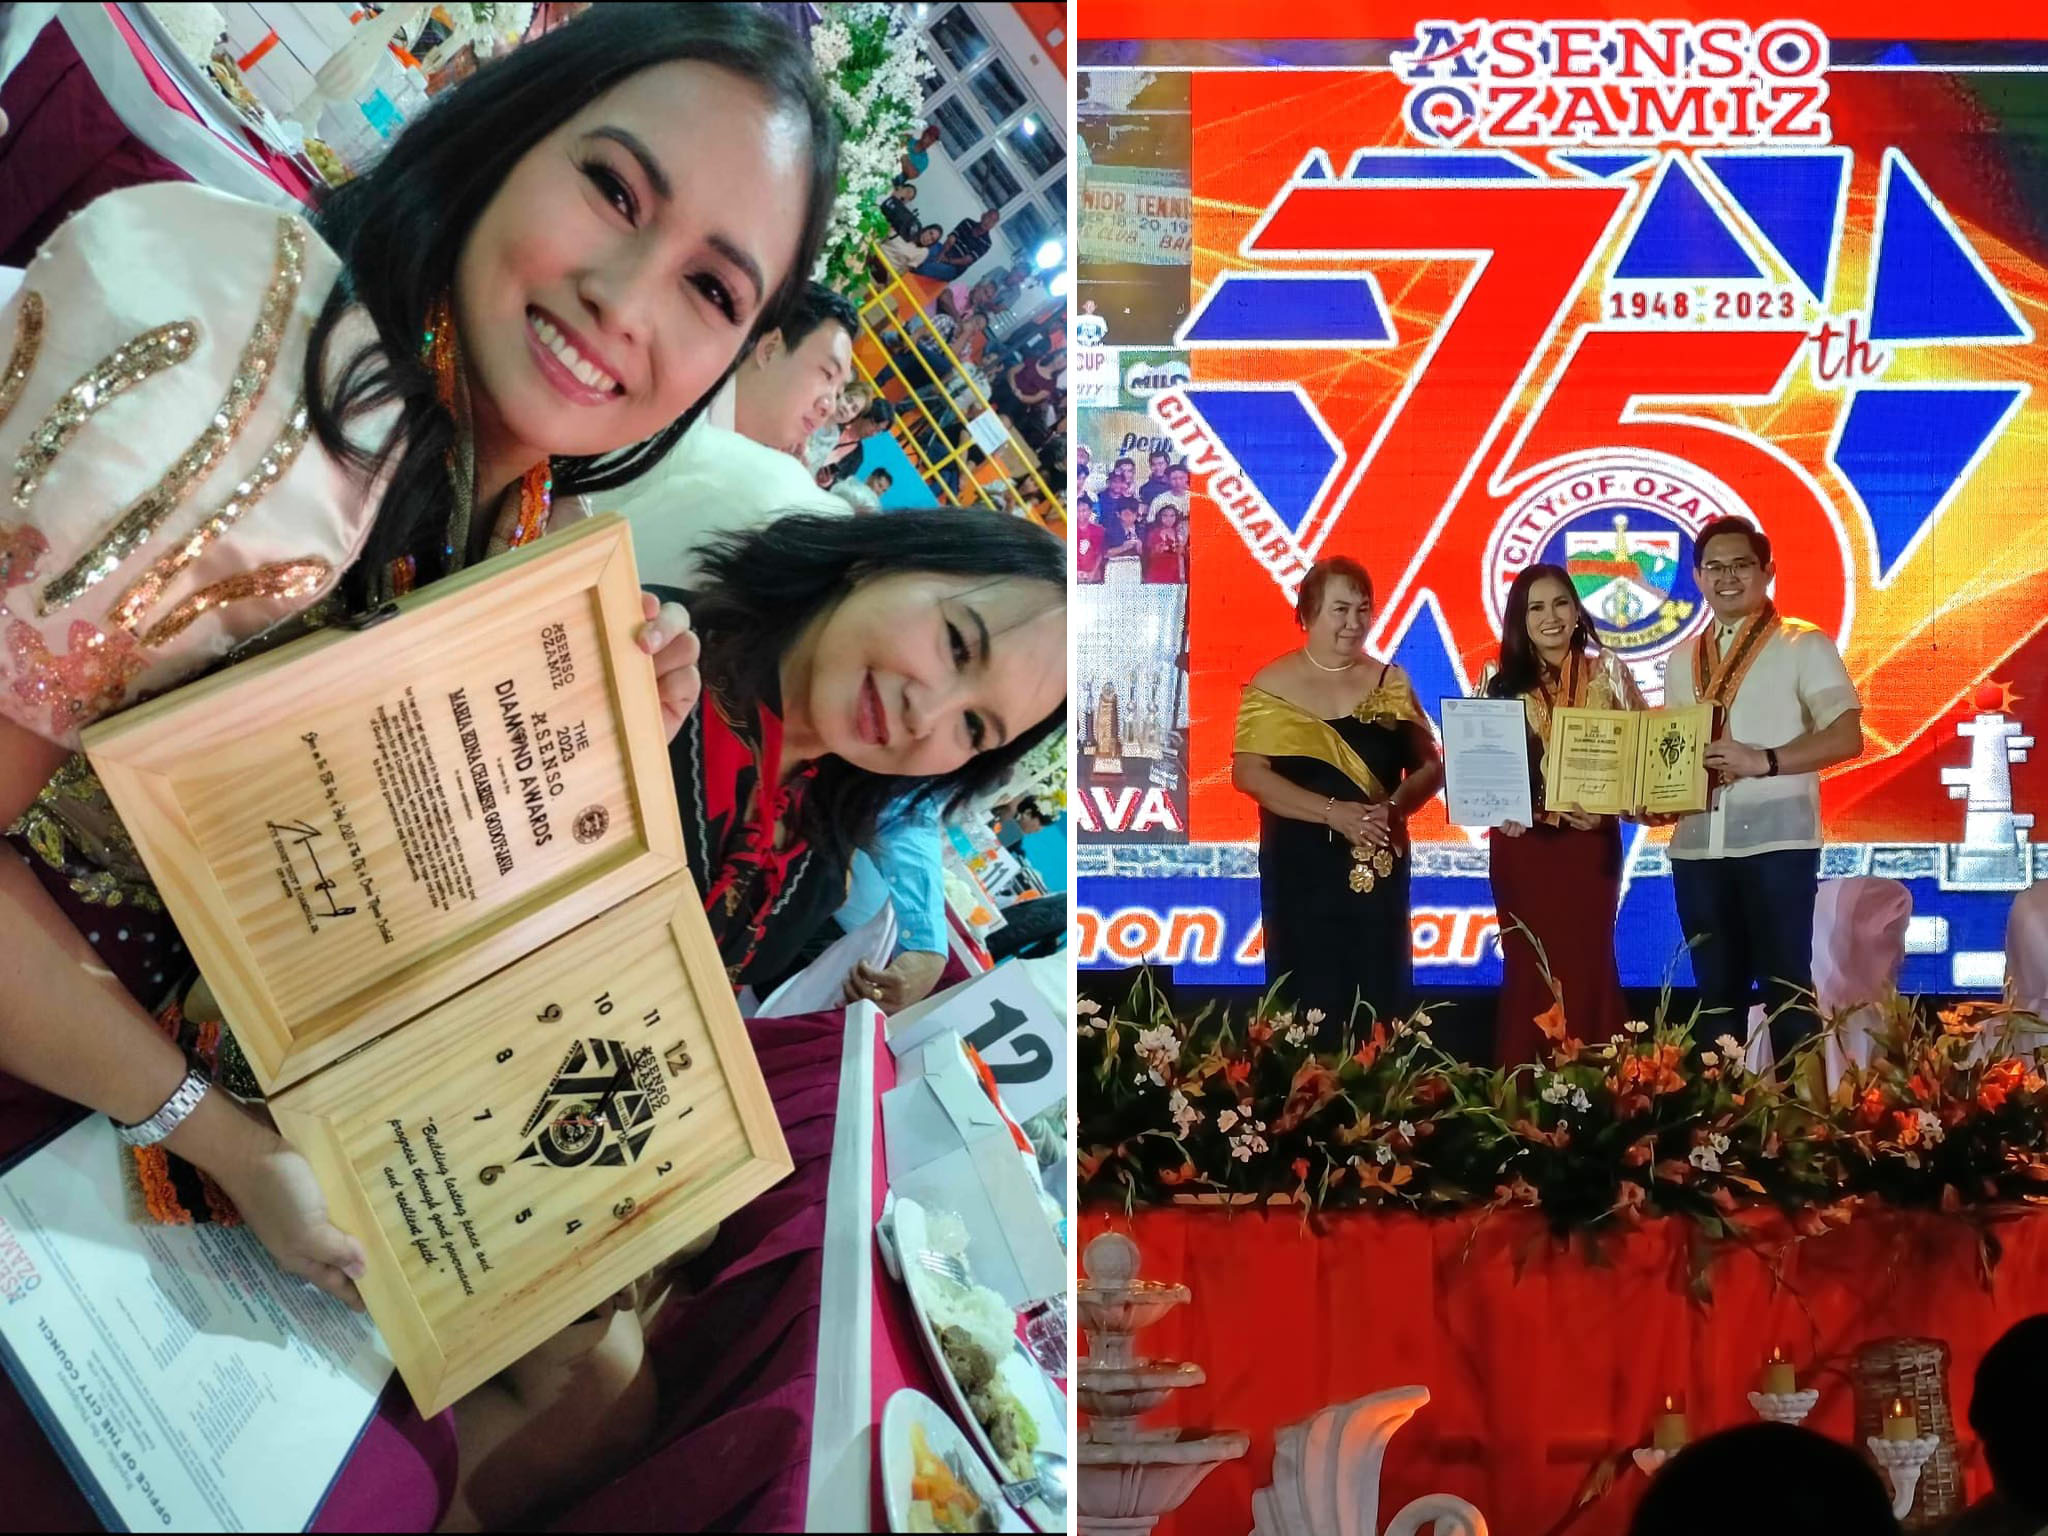 Celebrating Excellence: MU Alumna Maria Edna Charise Godoy-Java Receives 2023 Asenso Diamond 